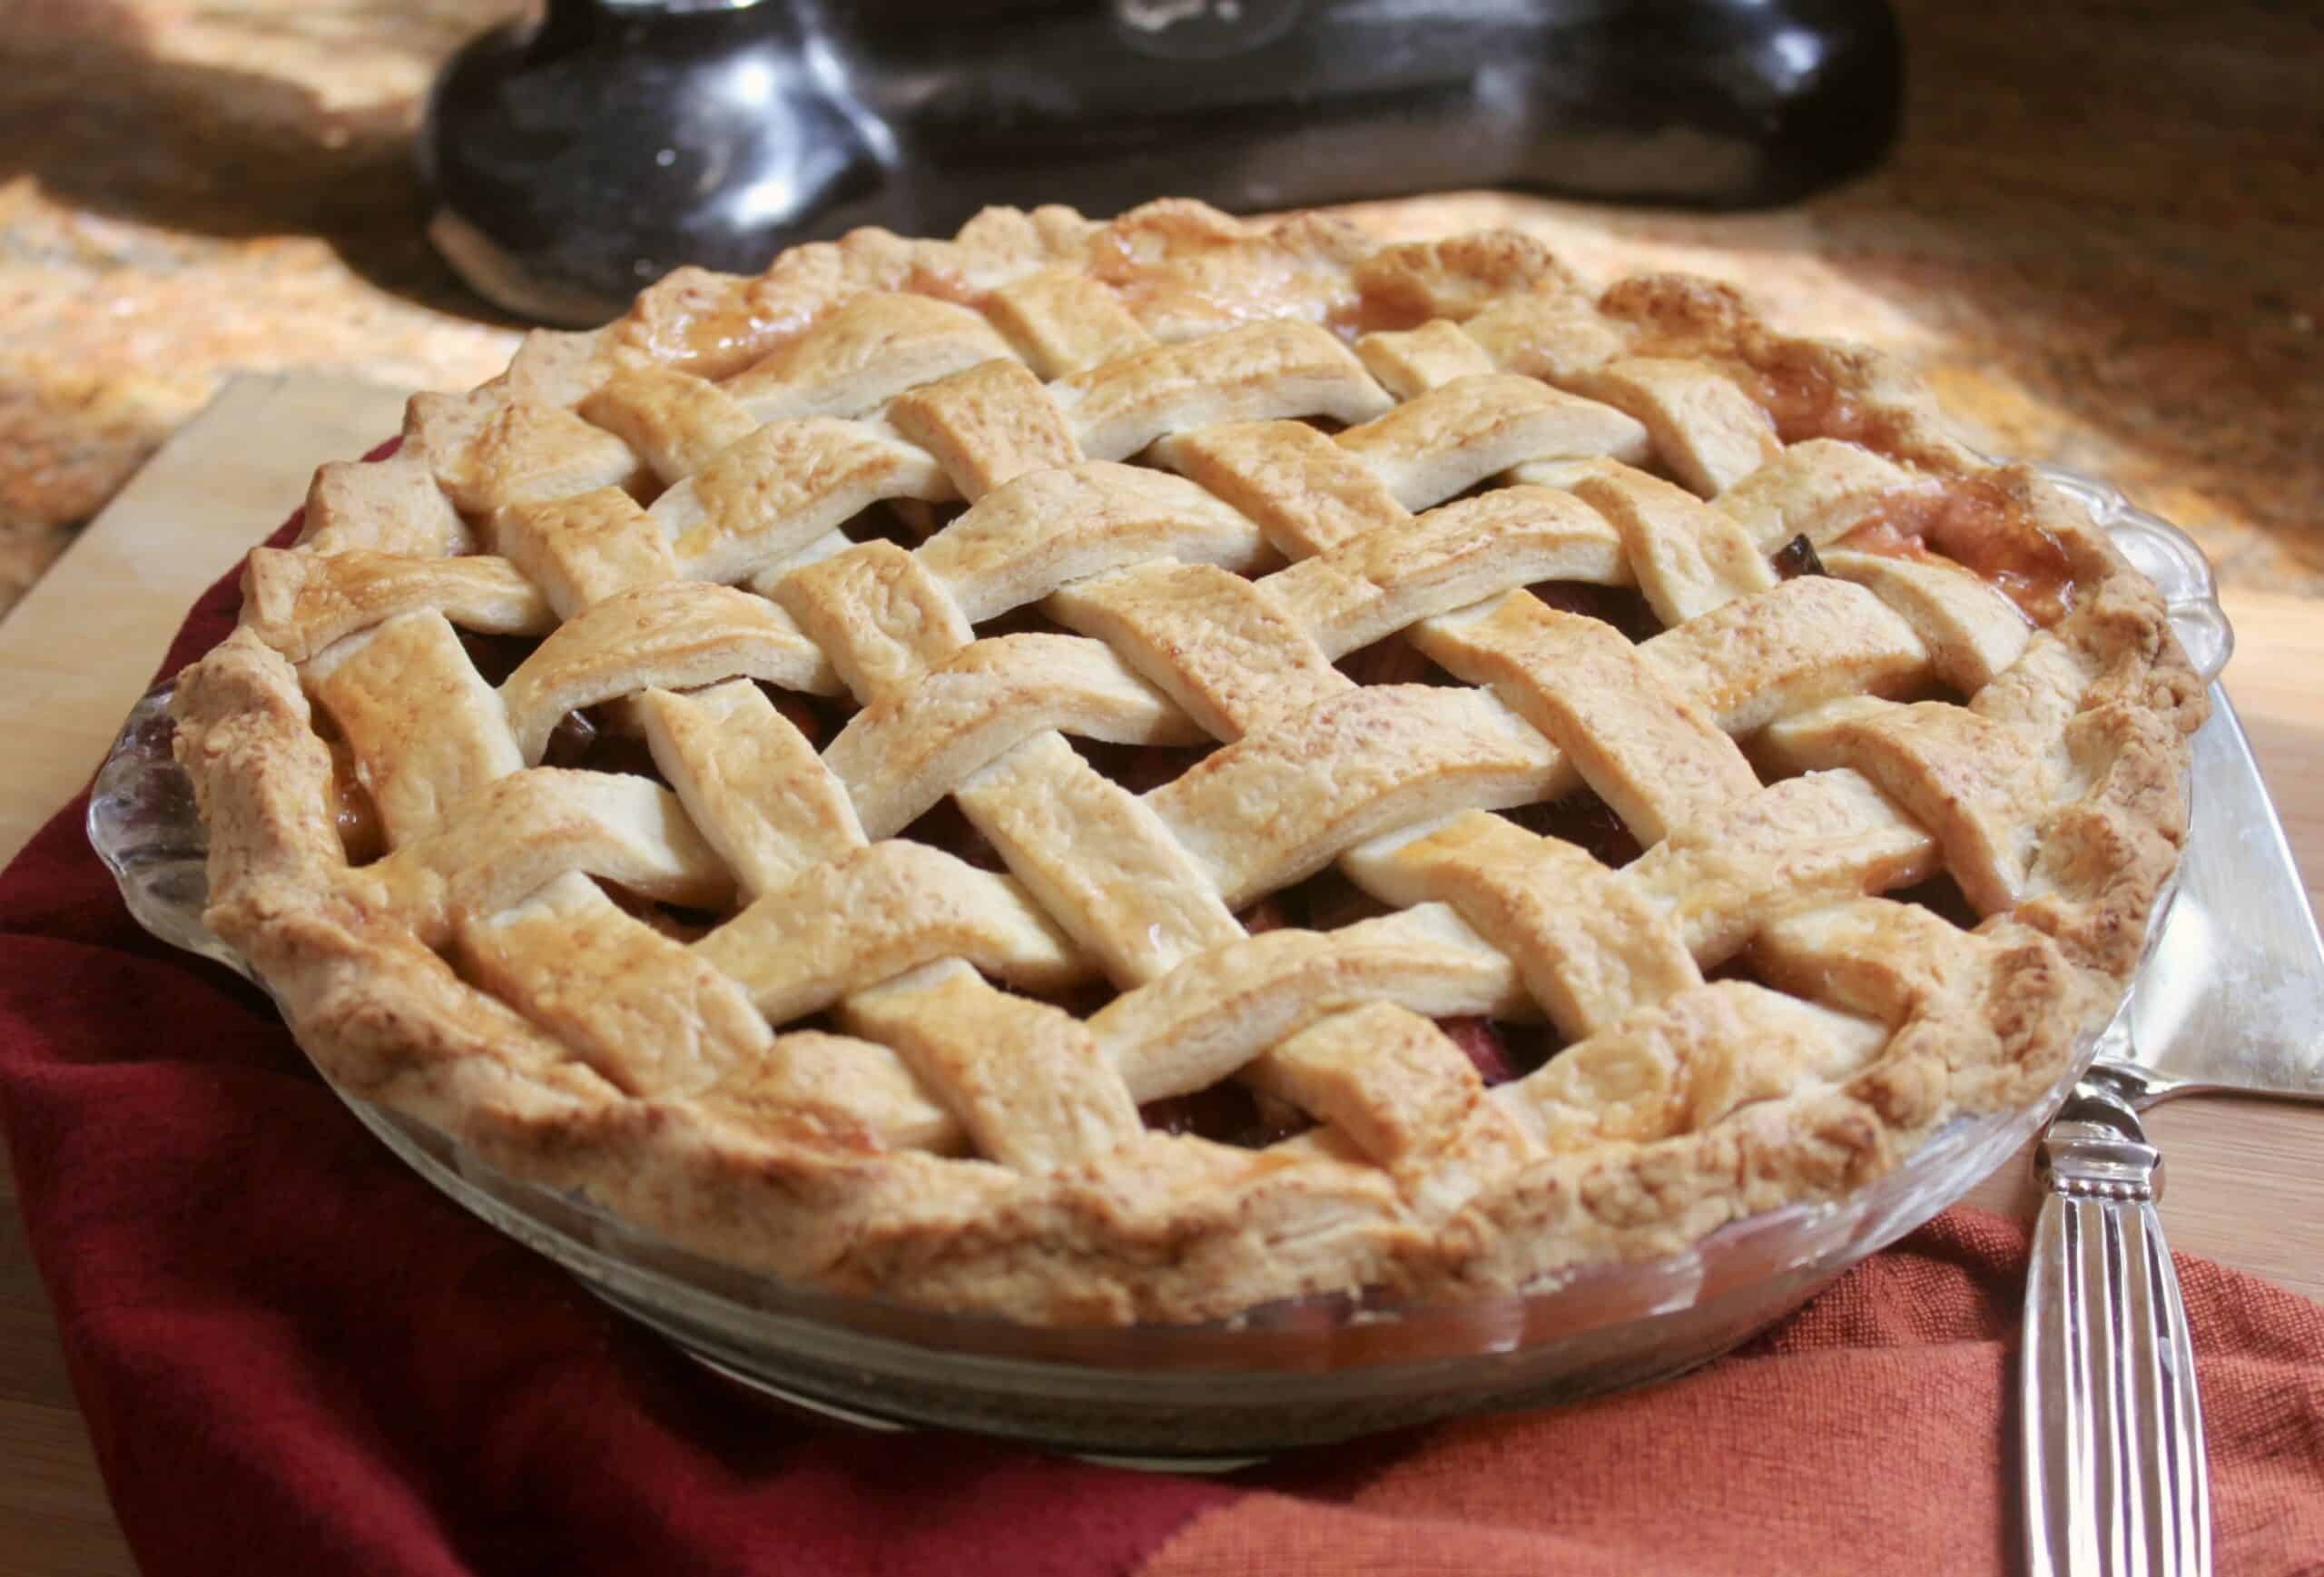 Rhubarb pie with lattice crust